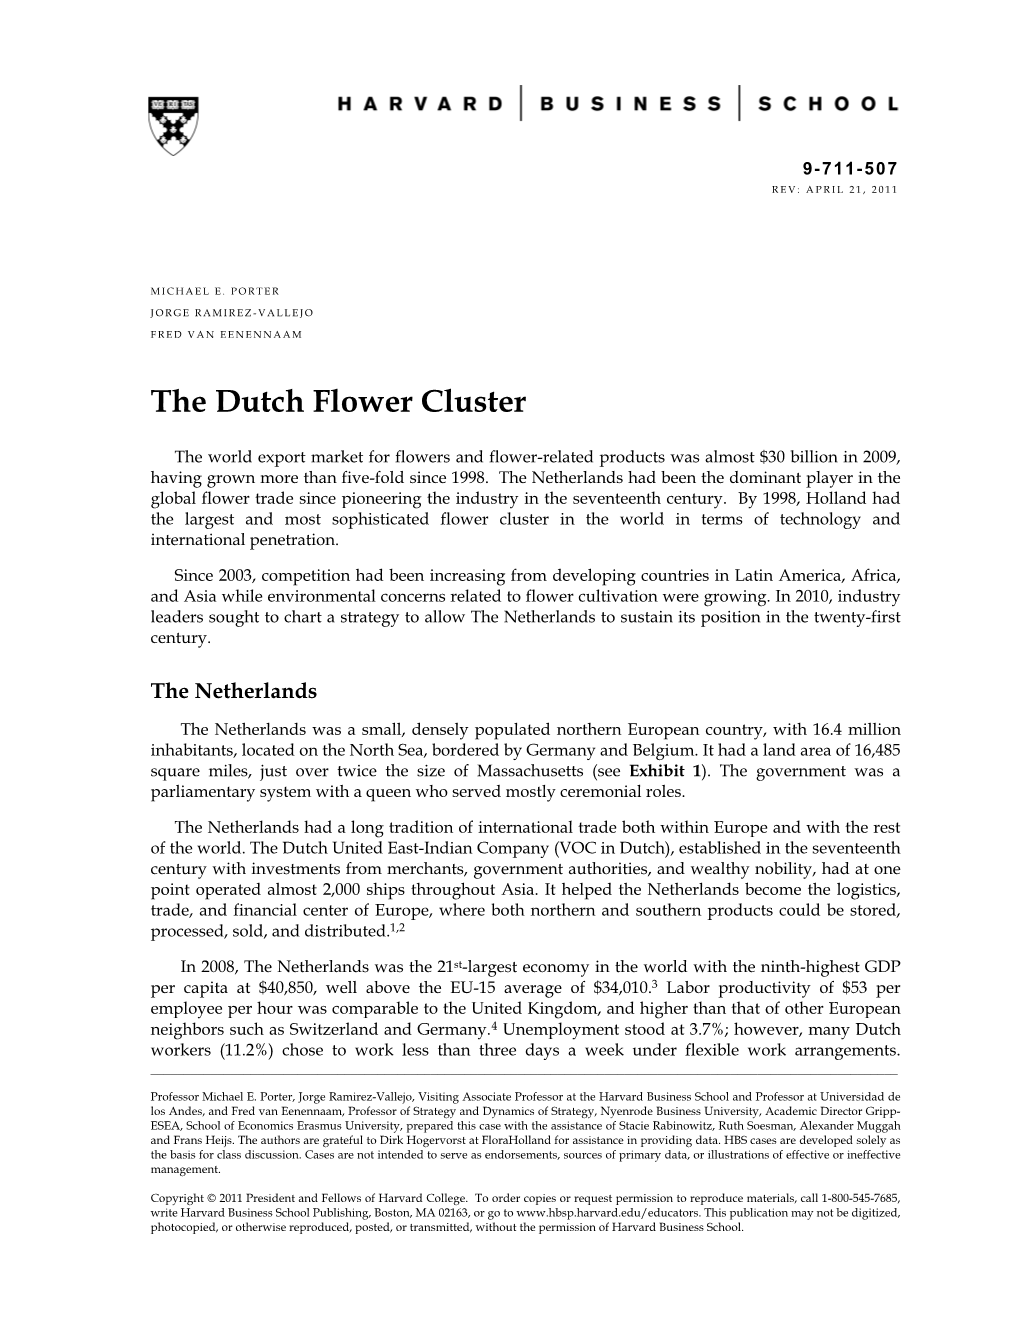 The Dutch Flower Cluster